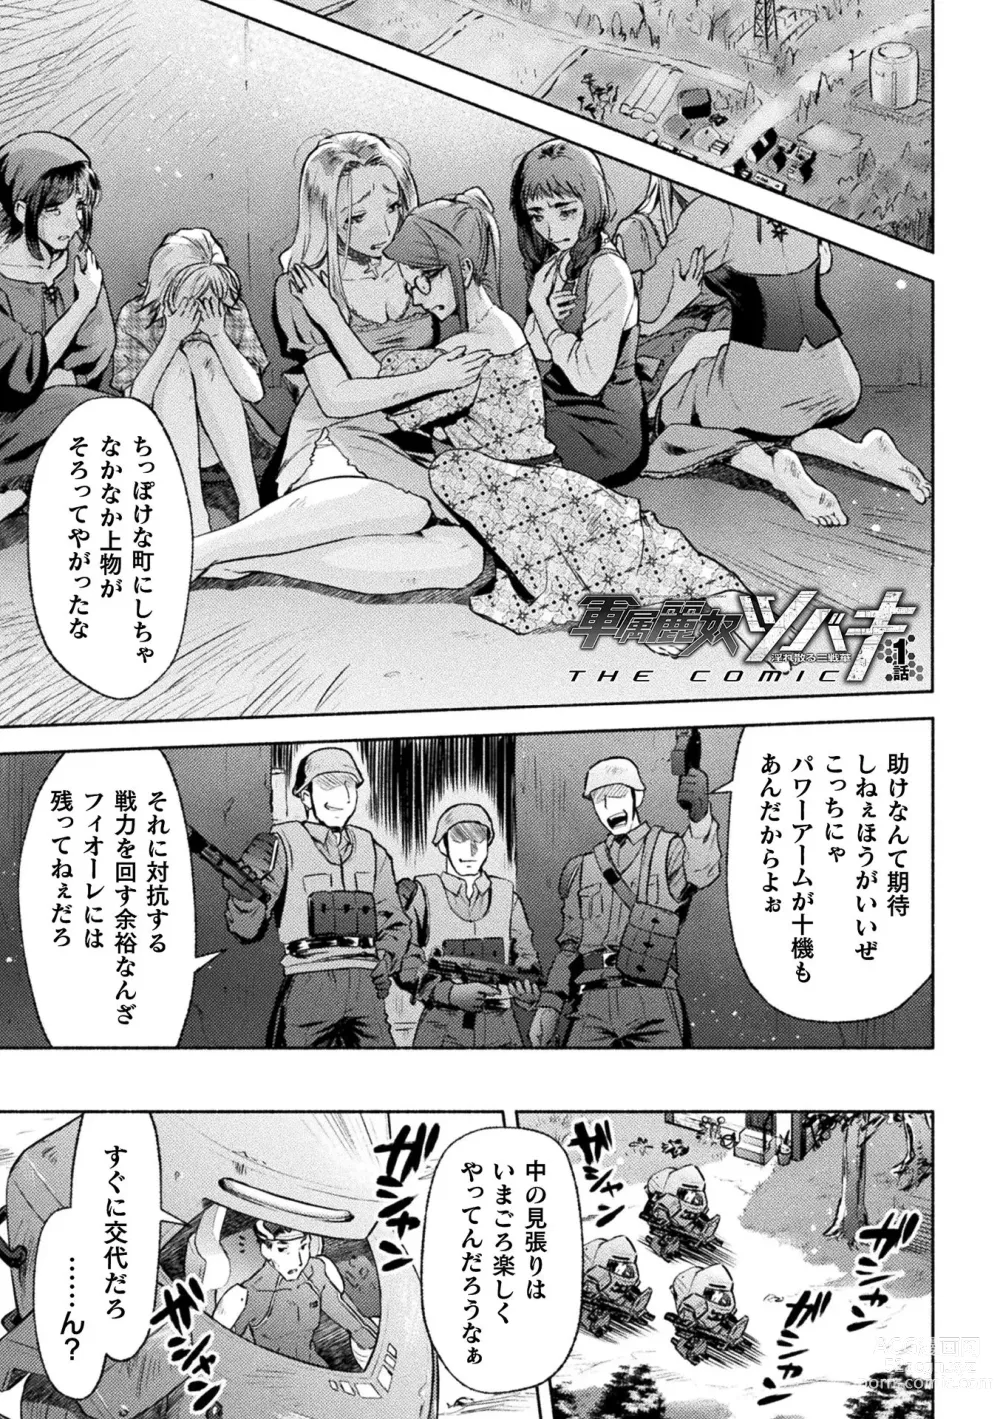 Page 3 of manga Kukkoro Heroines Vol. 34